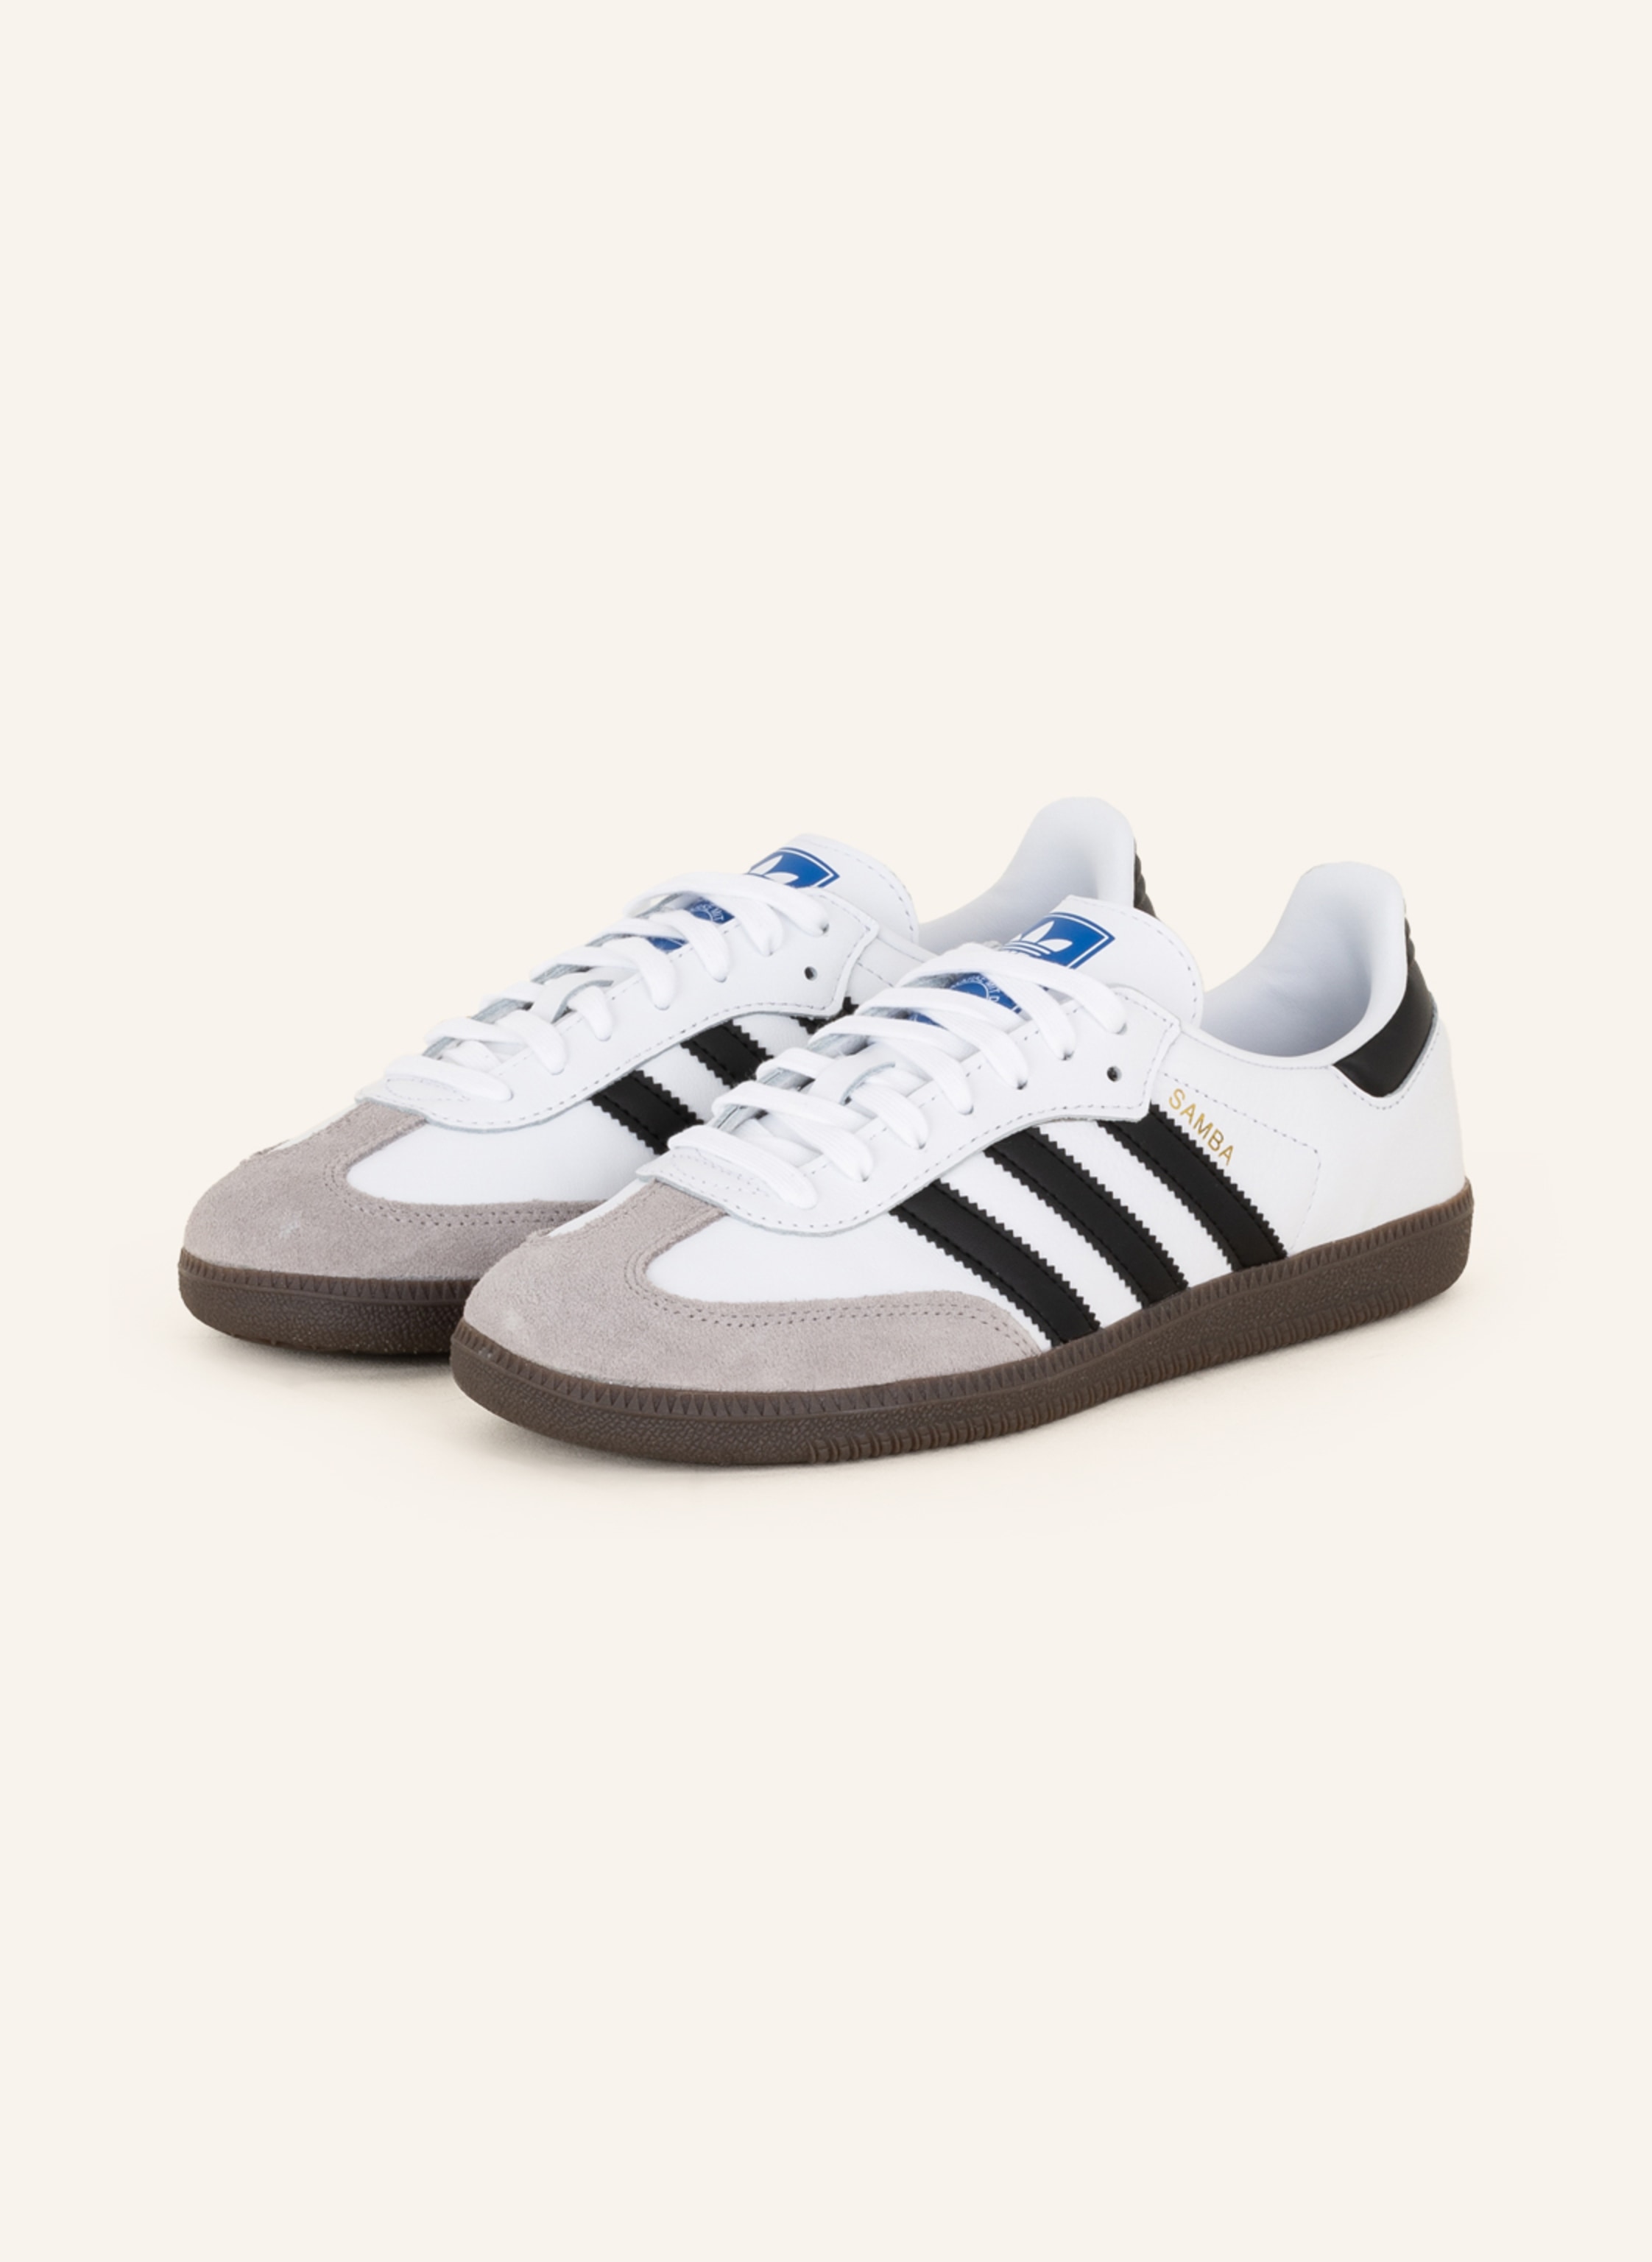 adidas Originals Sneakers SAMBA OG in white/ black/ gray